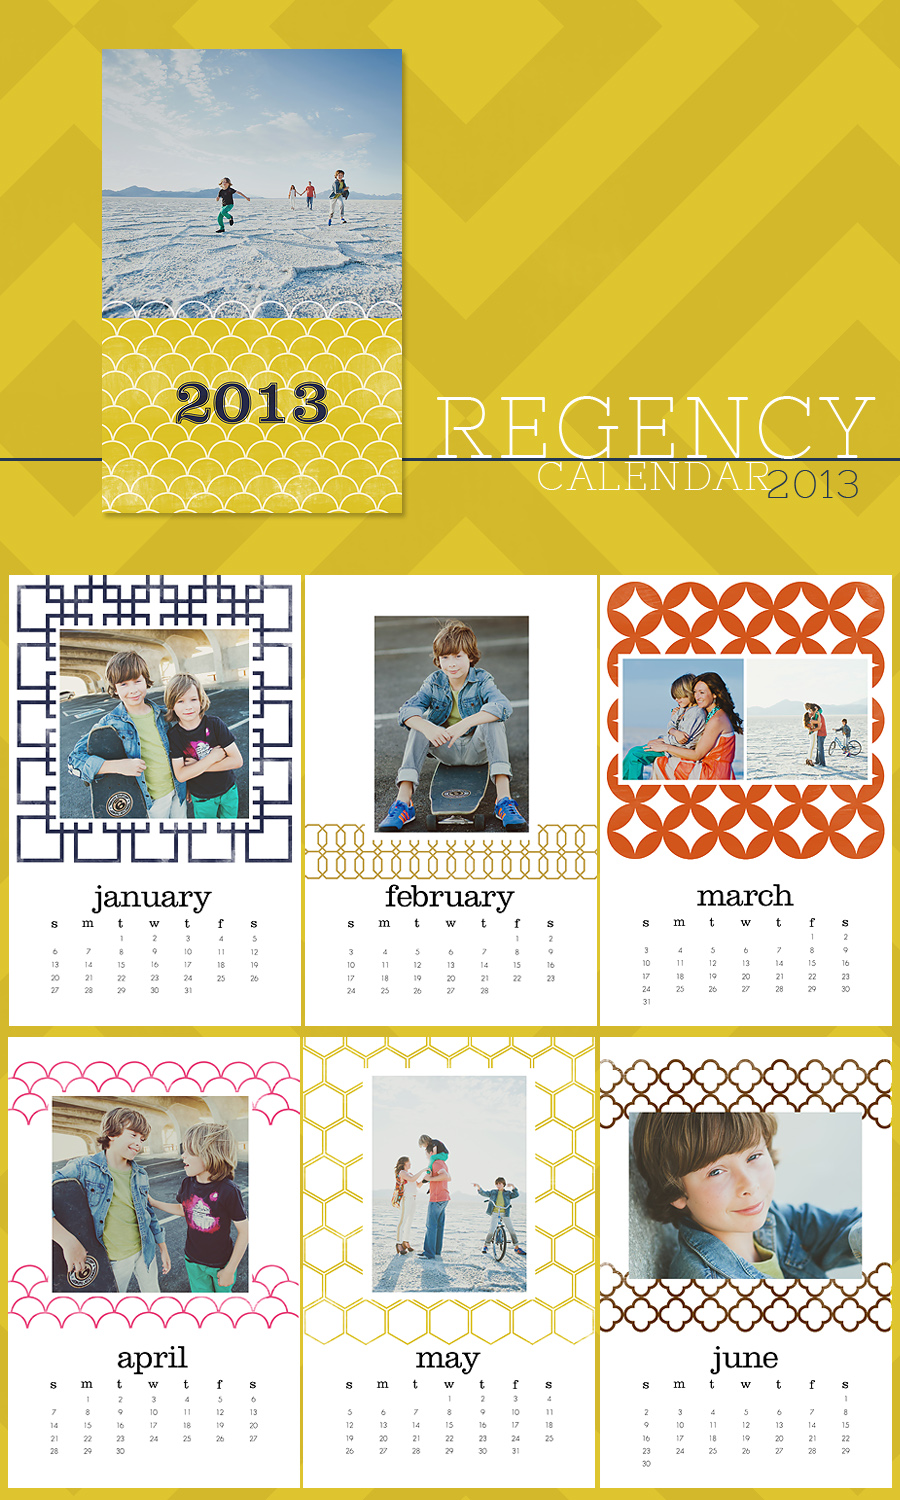 2013 Regency Calendar on sale 40 Simplicity Photography